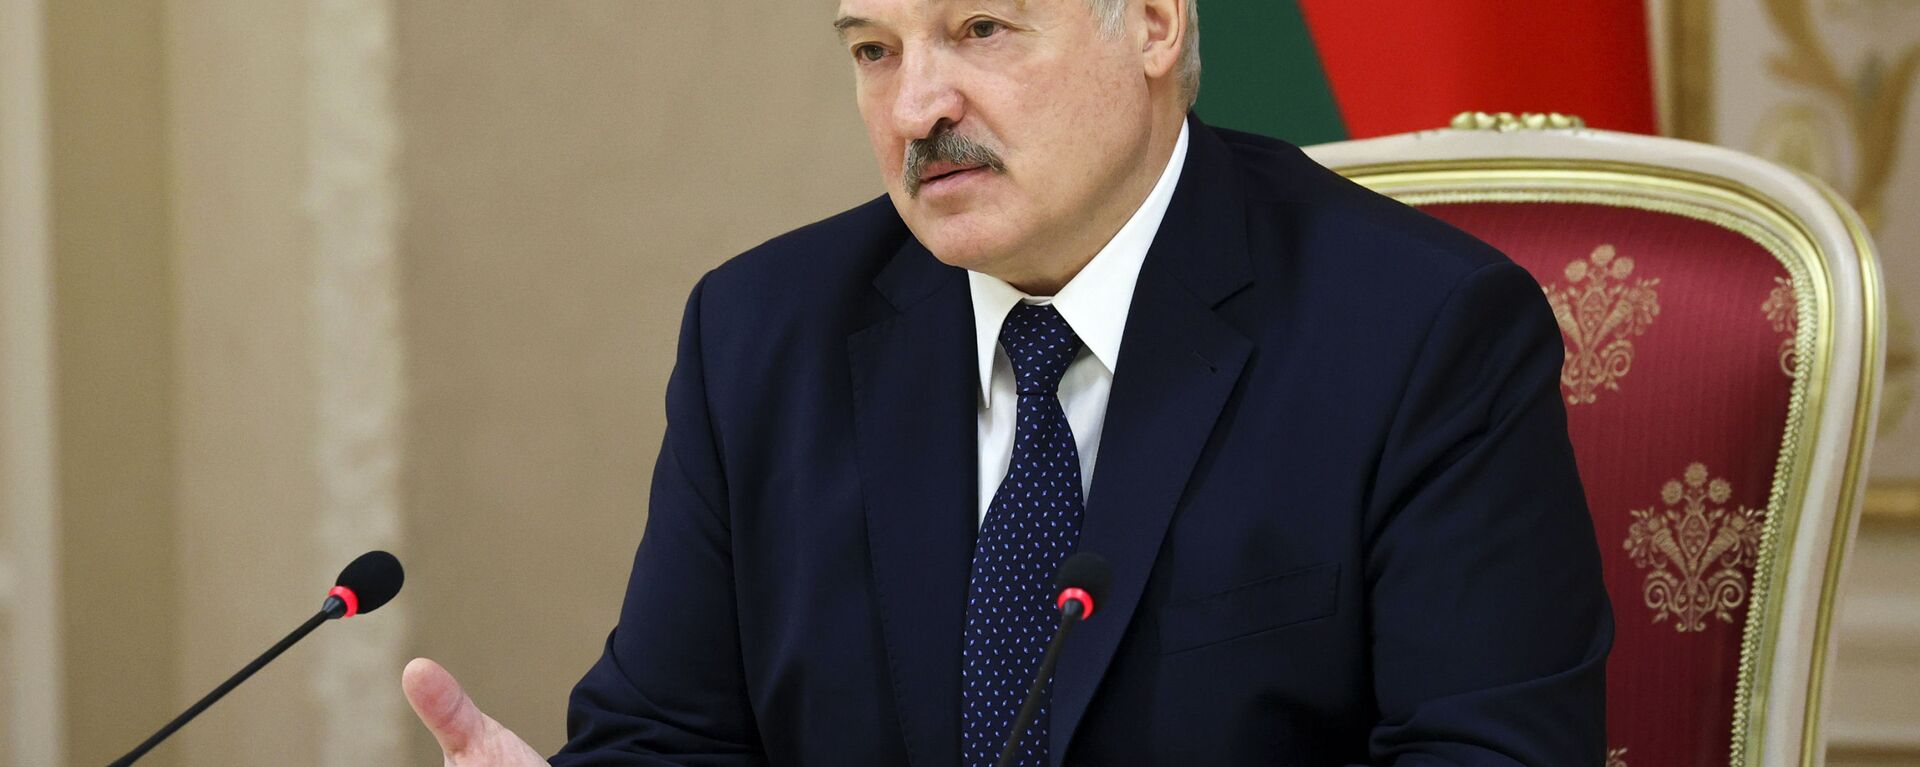 Президент Белоруссии Александр Лукашенко - Sputnik Lietuva, 1920, 22.10.2020